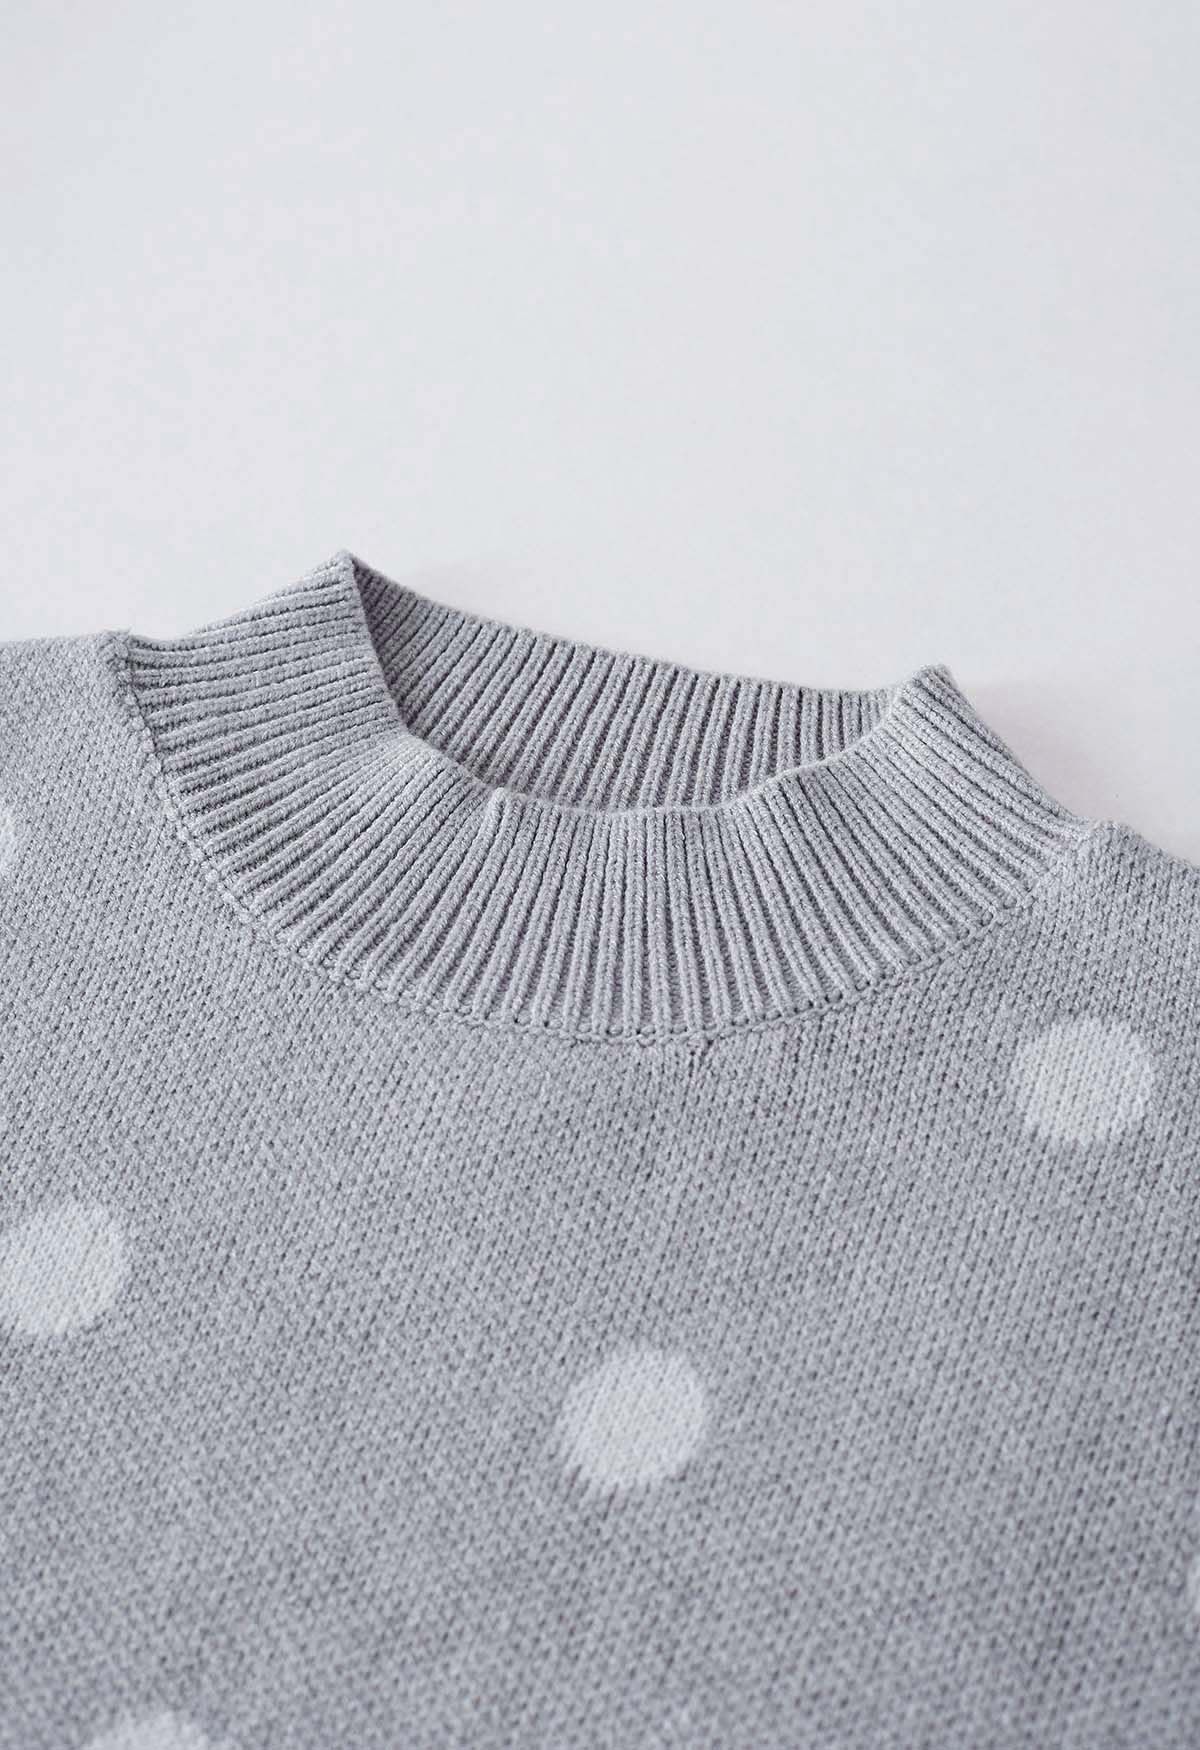 Adorable Polka Dot Mock Neck Knit Sweater in Grey